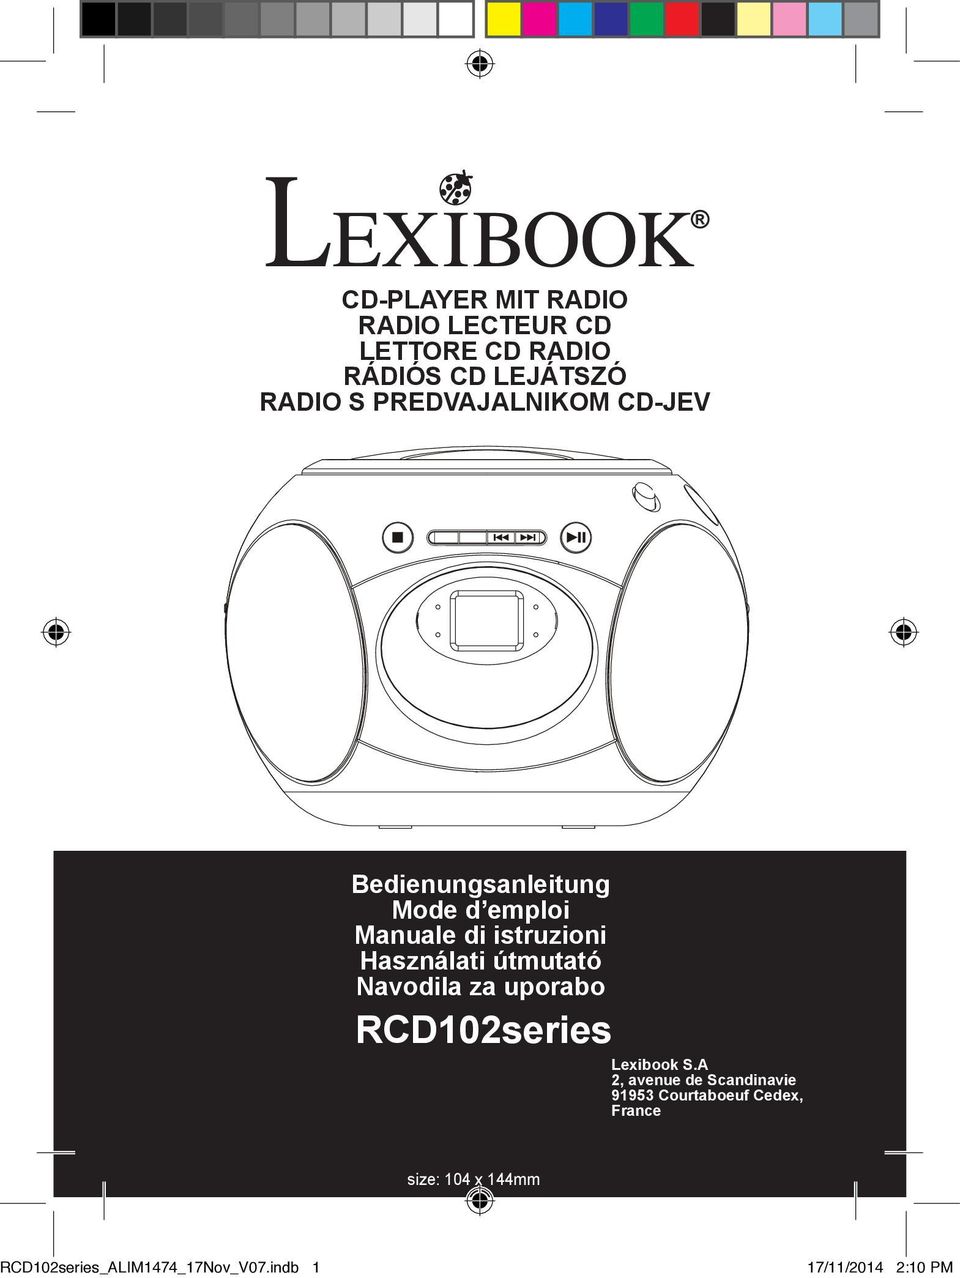 Használati útmutató Navodila za uporabo RCD102series Lexibook S.